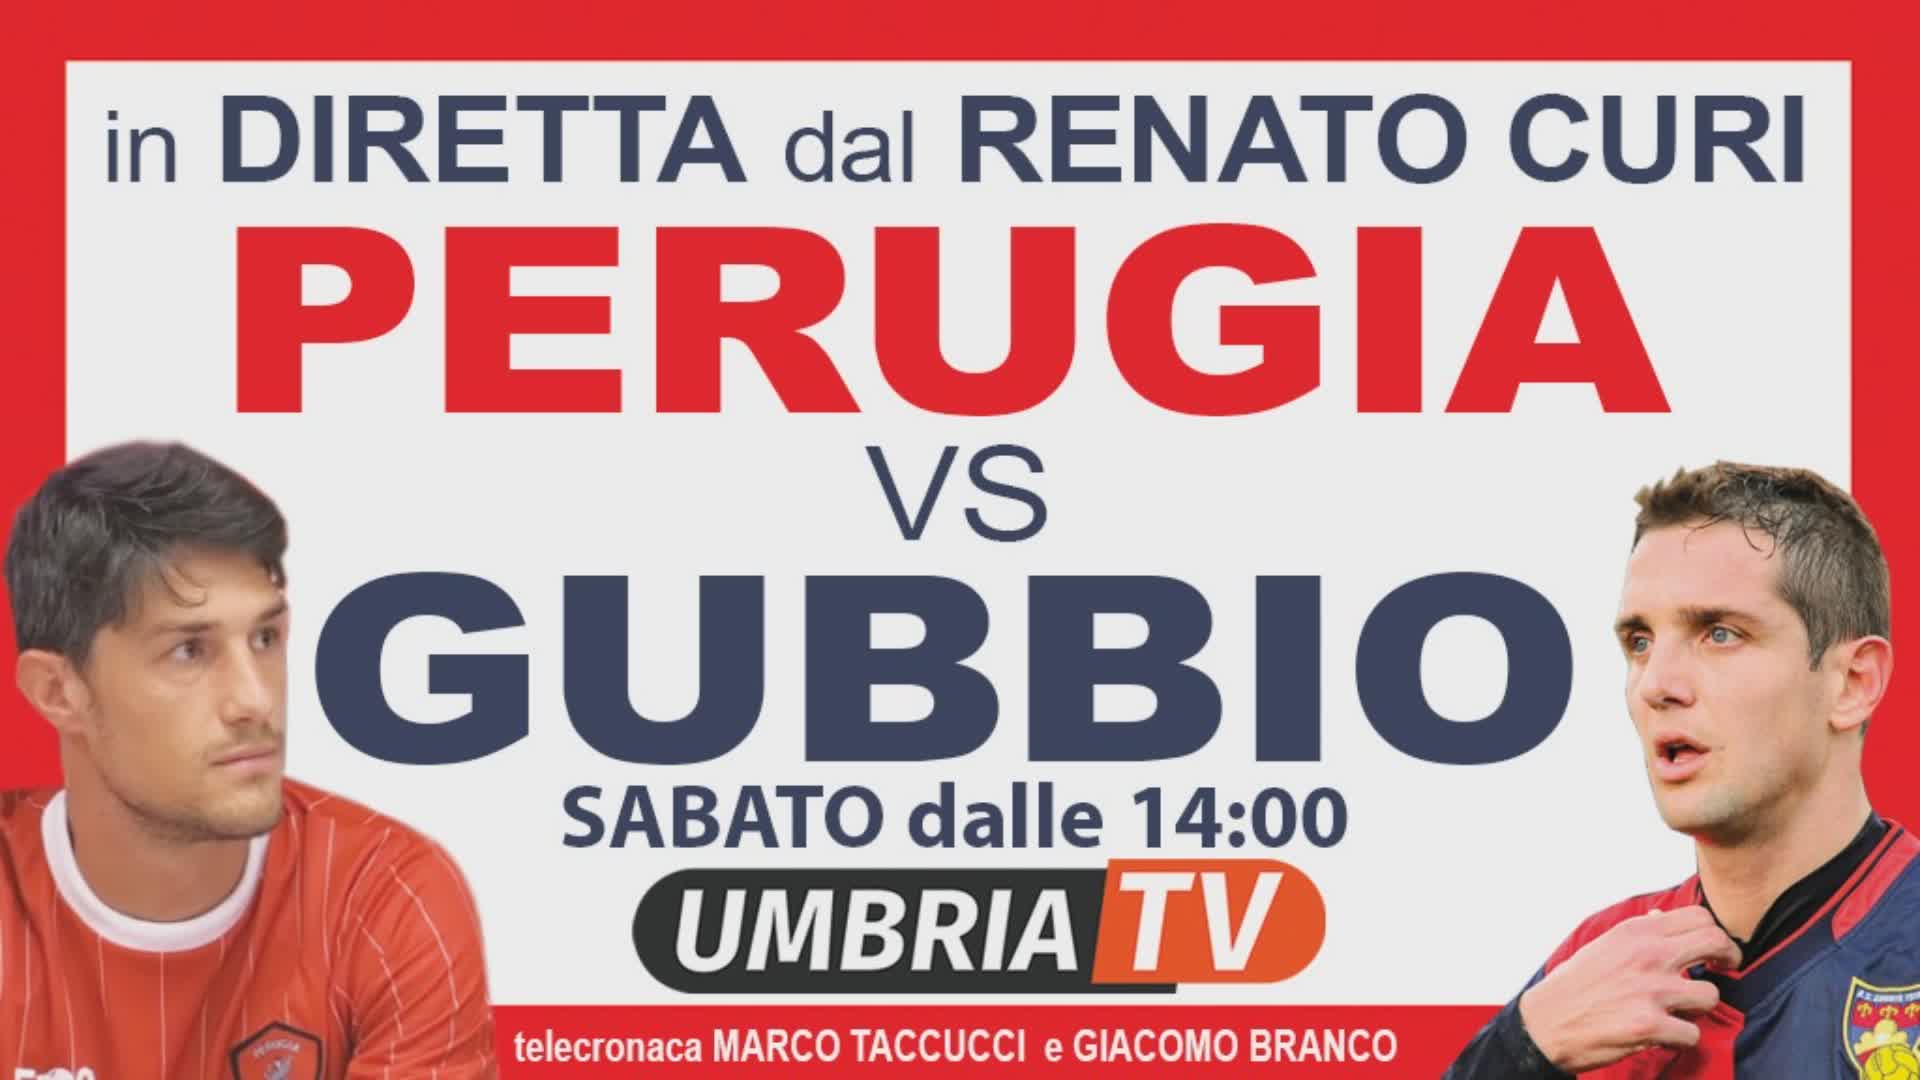 Perugia-Gubbio sabato alle 15 in diretta su Umbria Tv. IL PUNTO